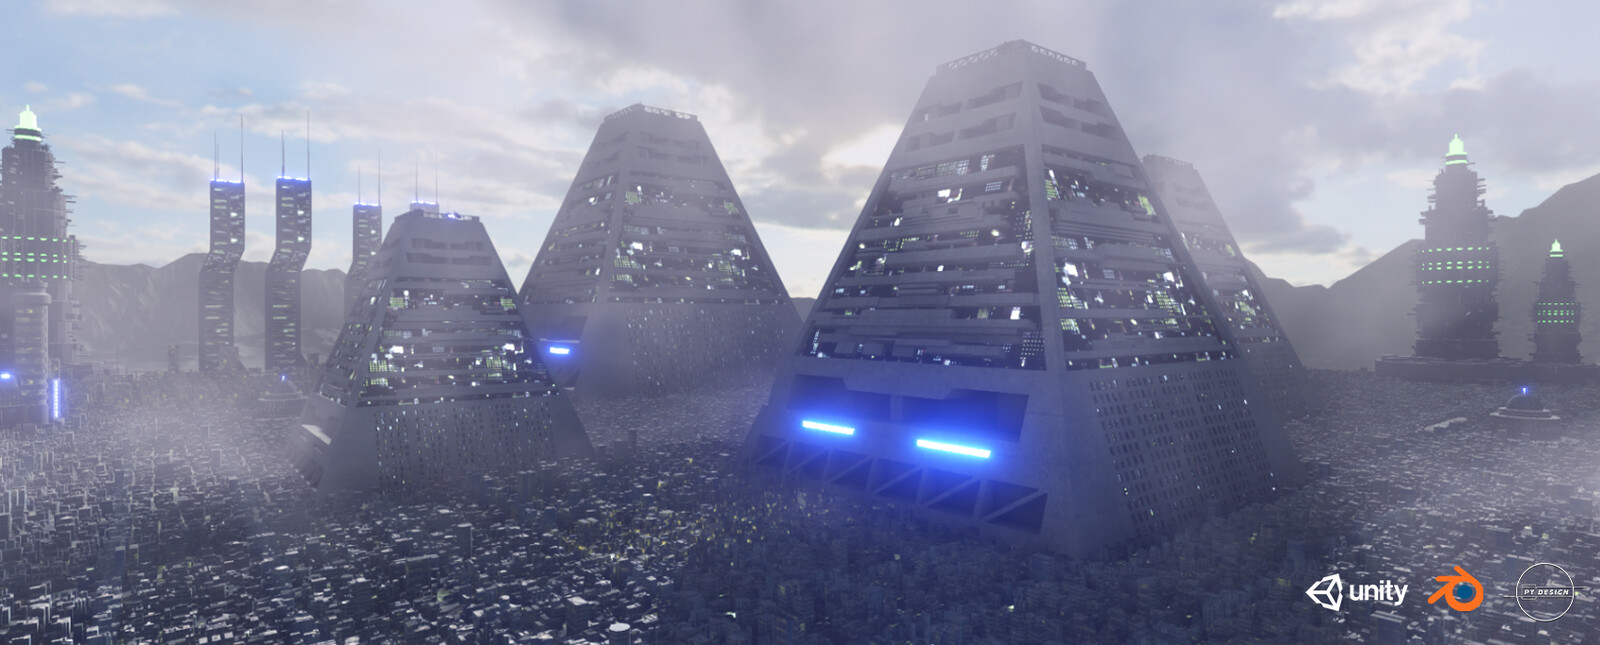 Mega City - Pyramid Towers